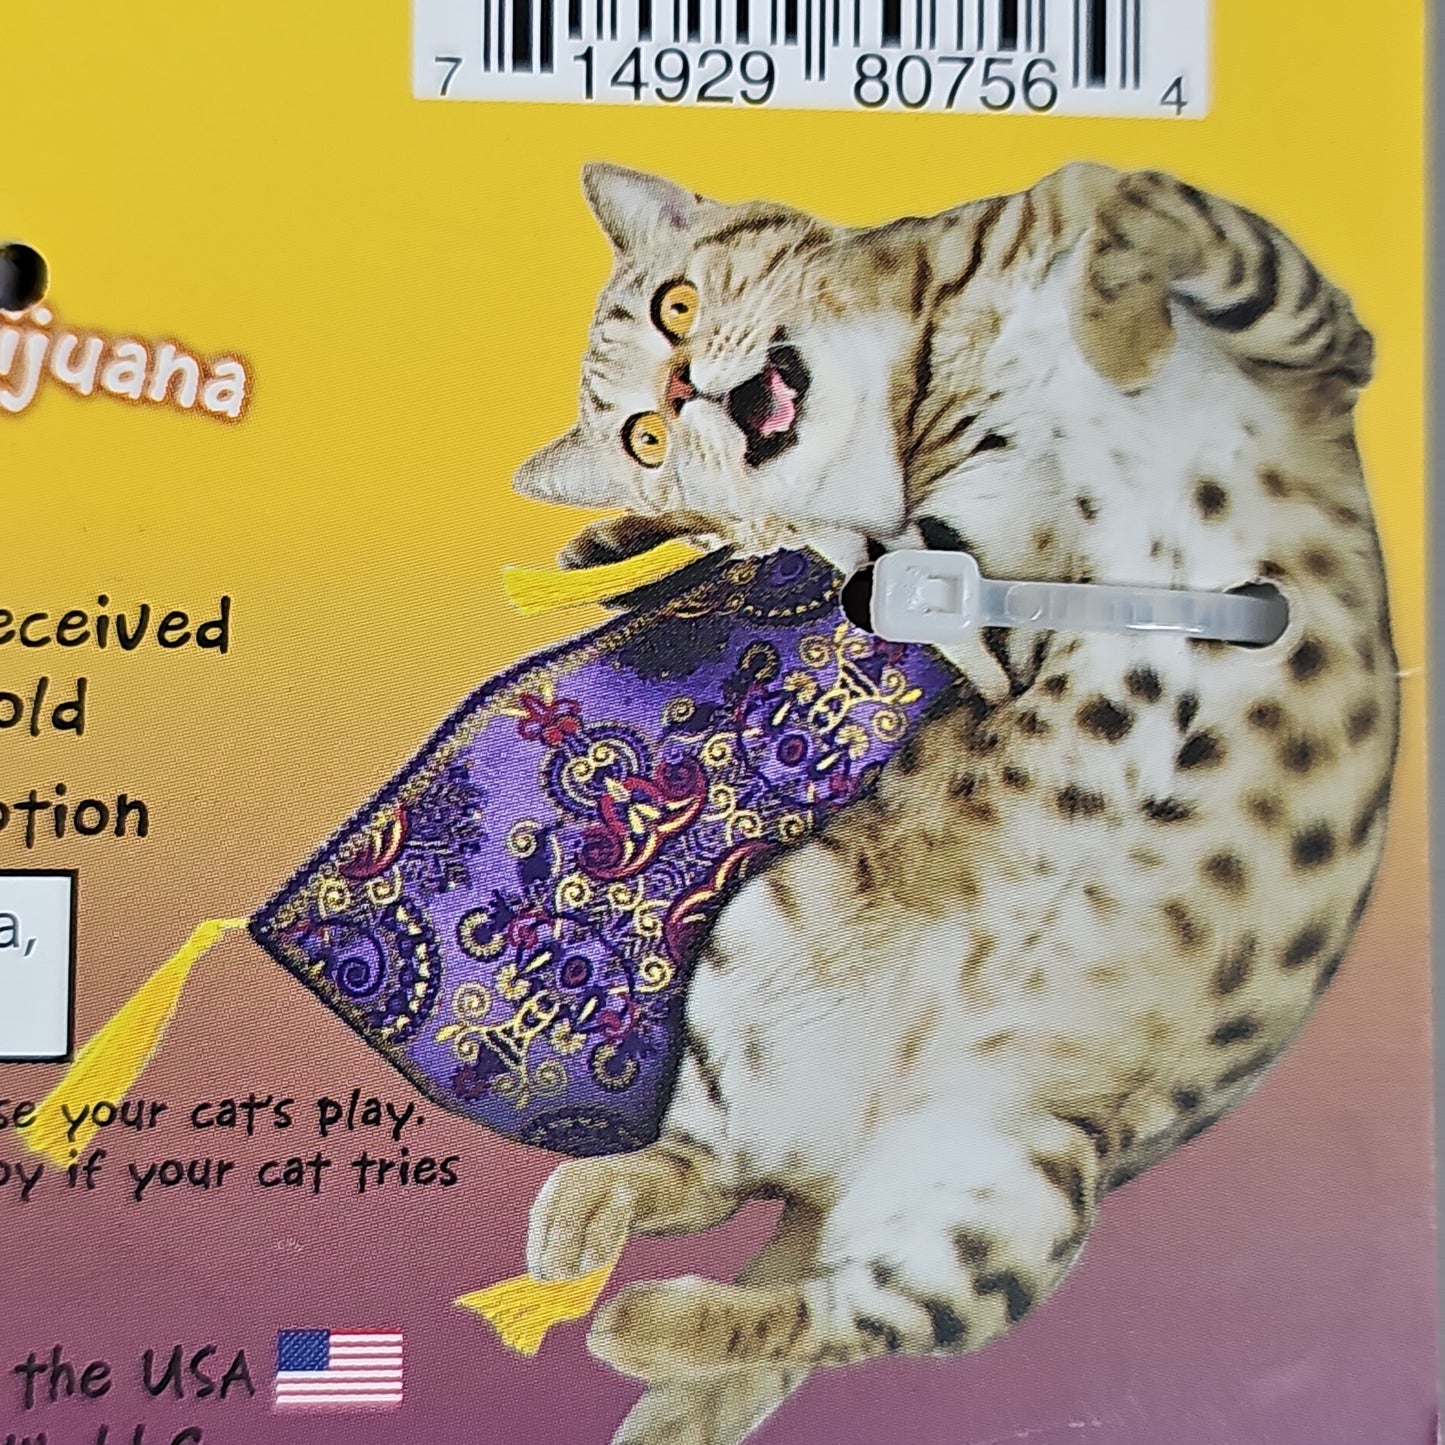 SMARTER PAW Meowijuana Organic Catnip Toy CASE OF 24! Get a Ride Magic Carpet Cat Toy (New)